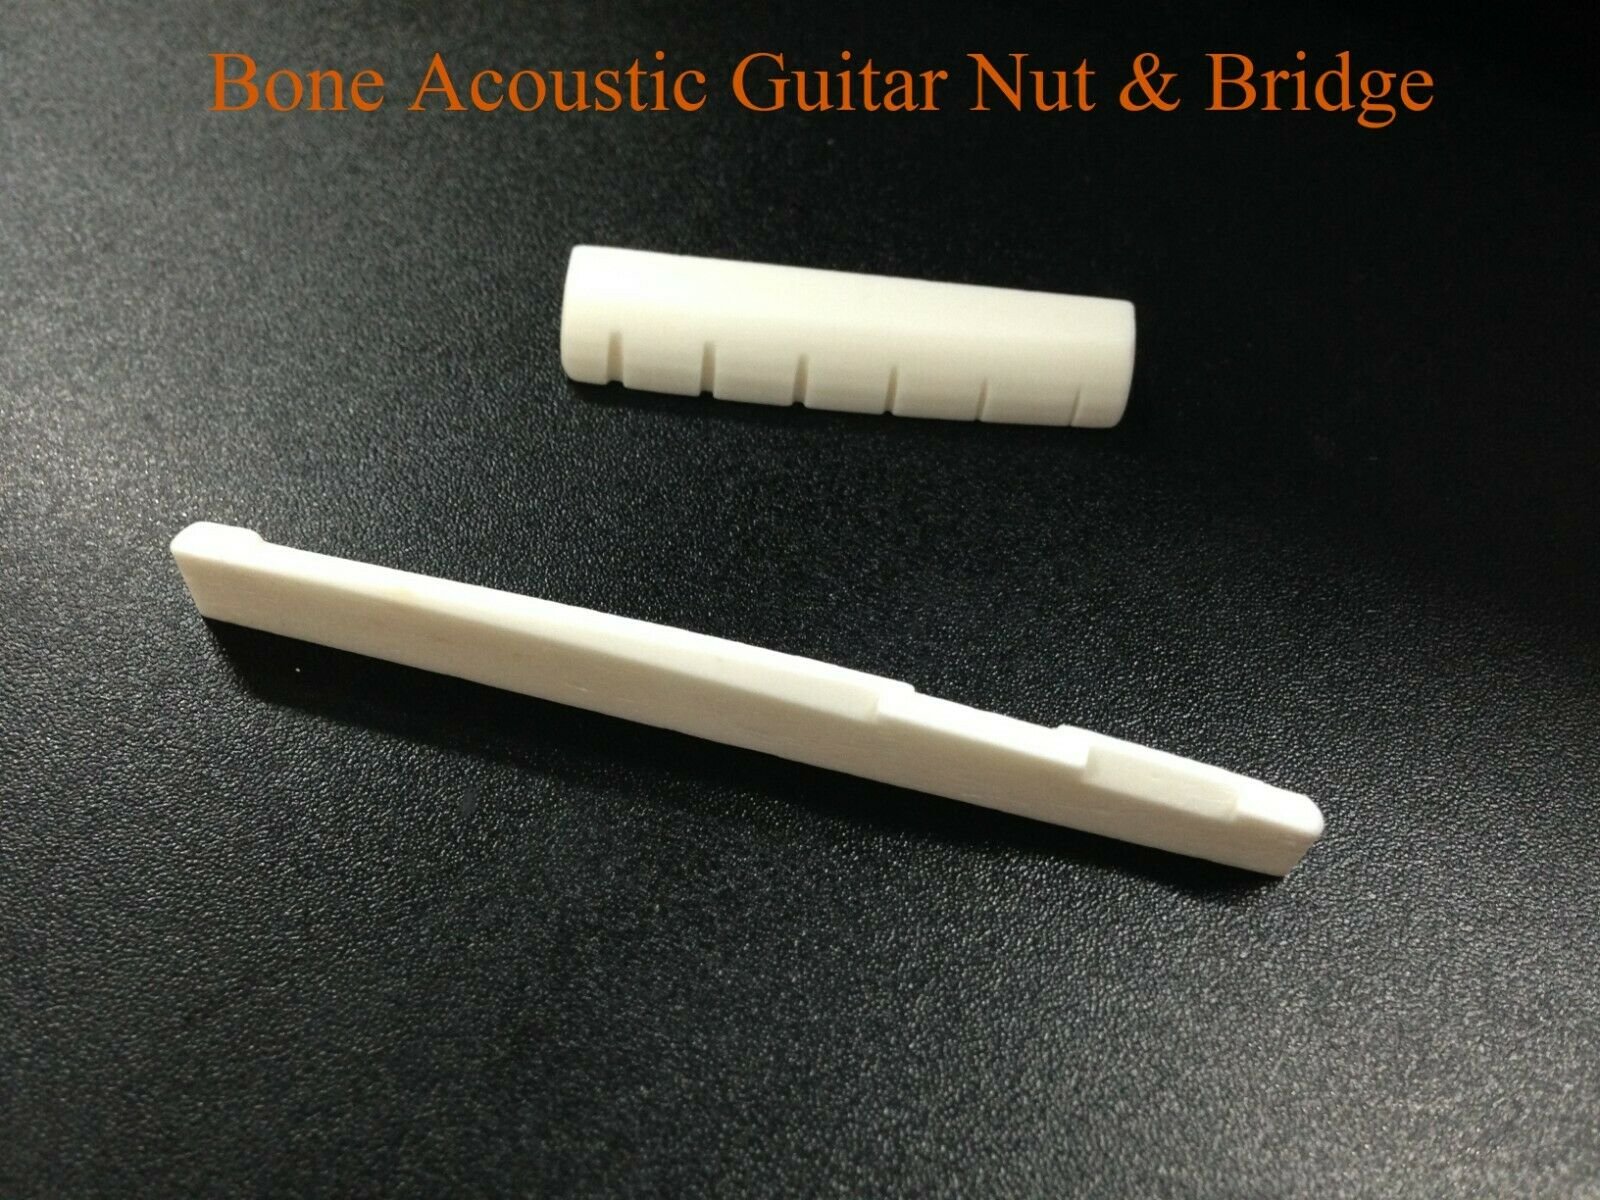 Ivory White Bone Acoustic Guitar Nut & Bridge, For 6-String Acoustic Guitar